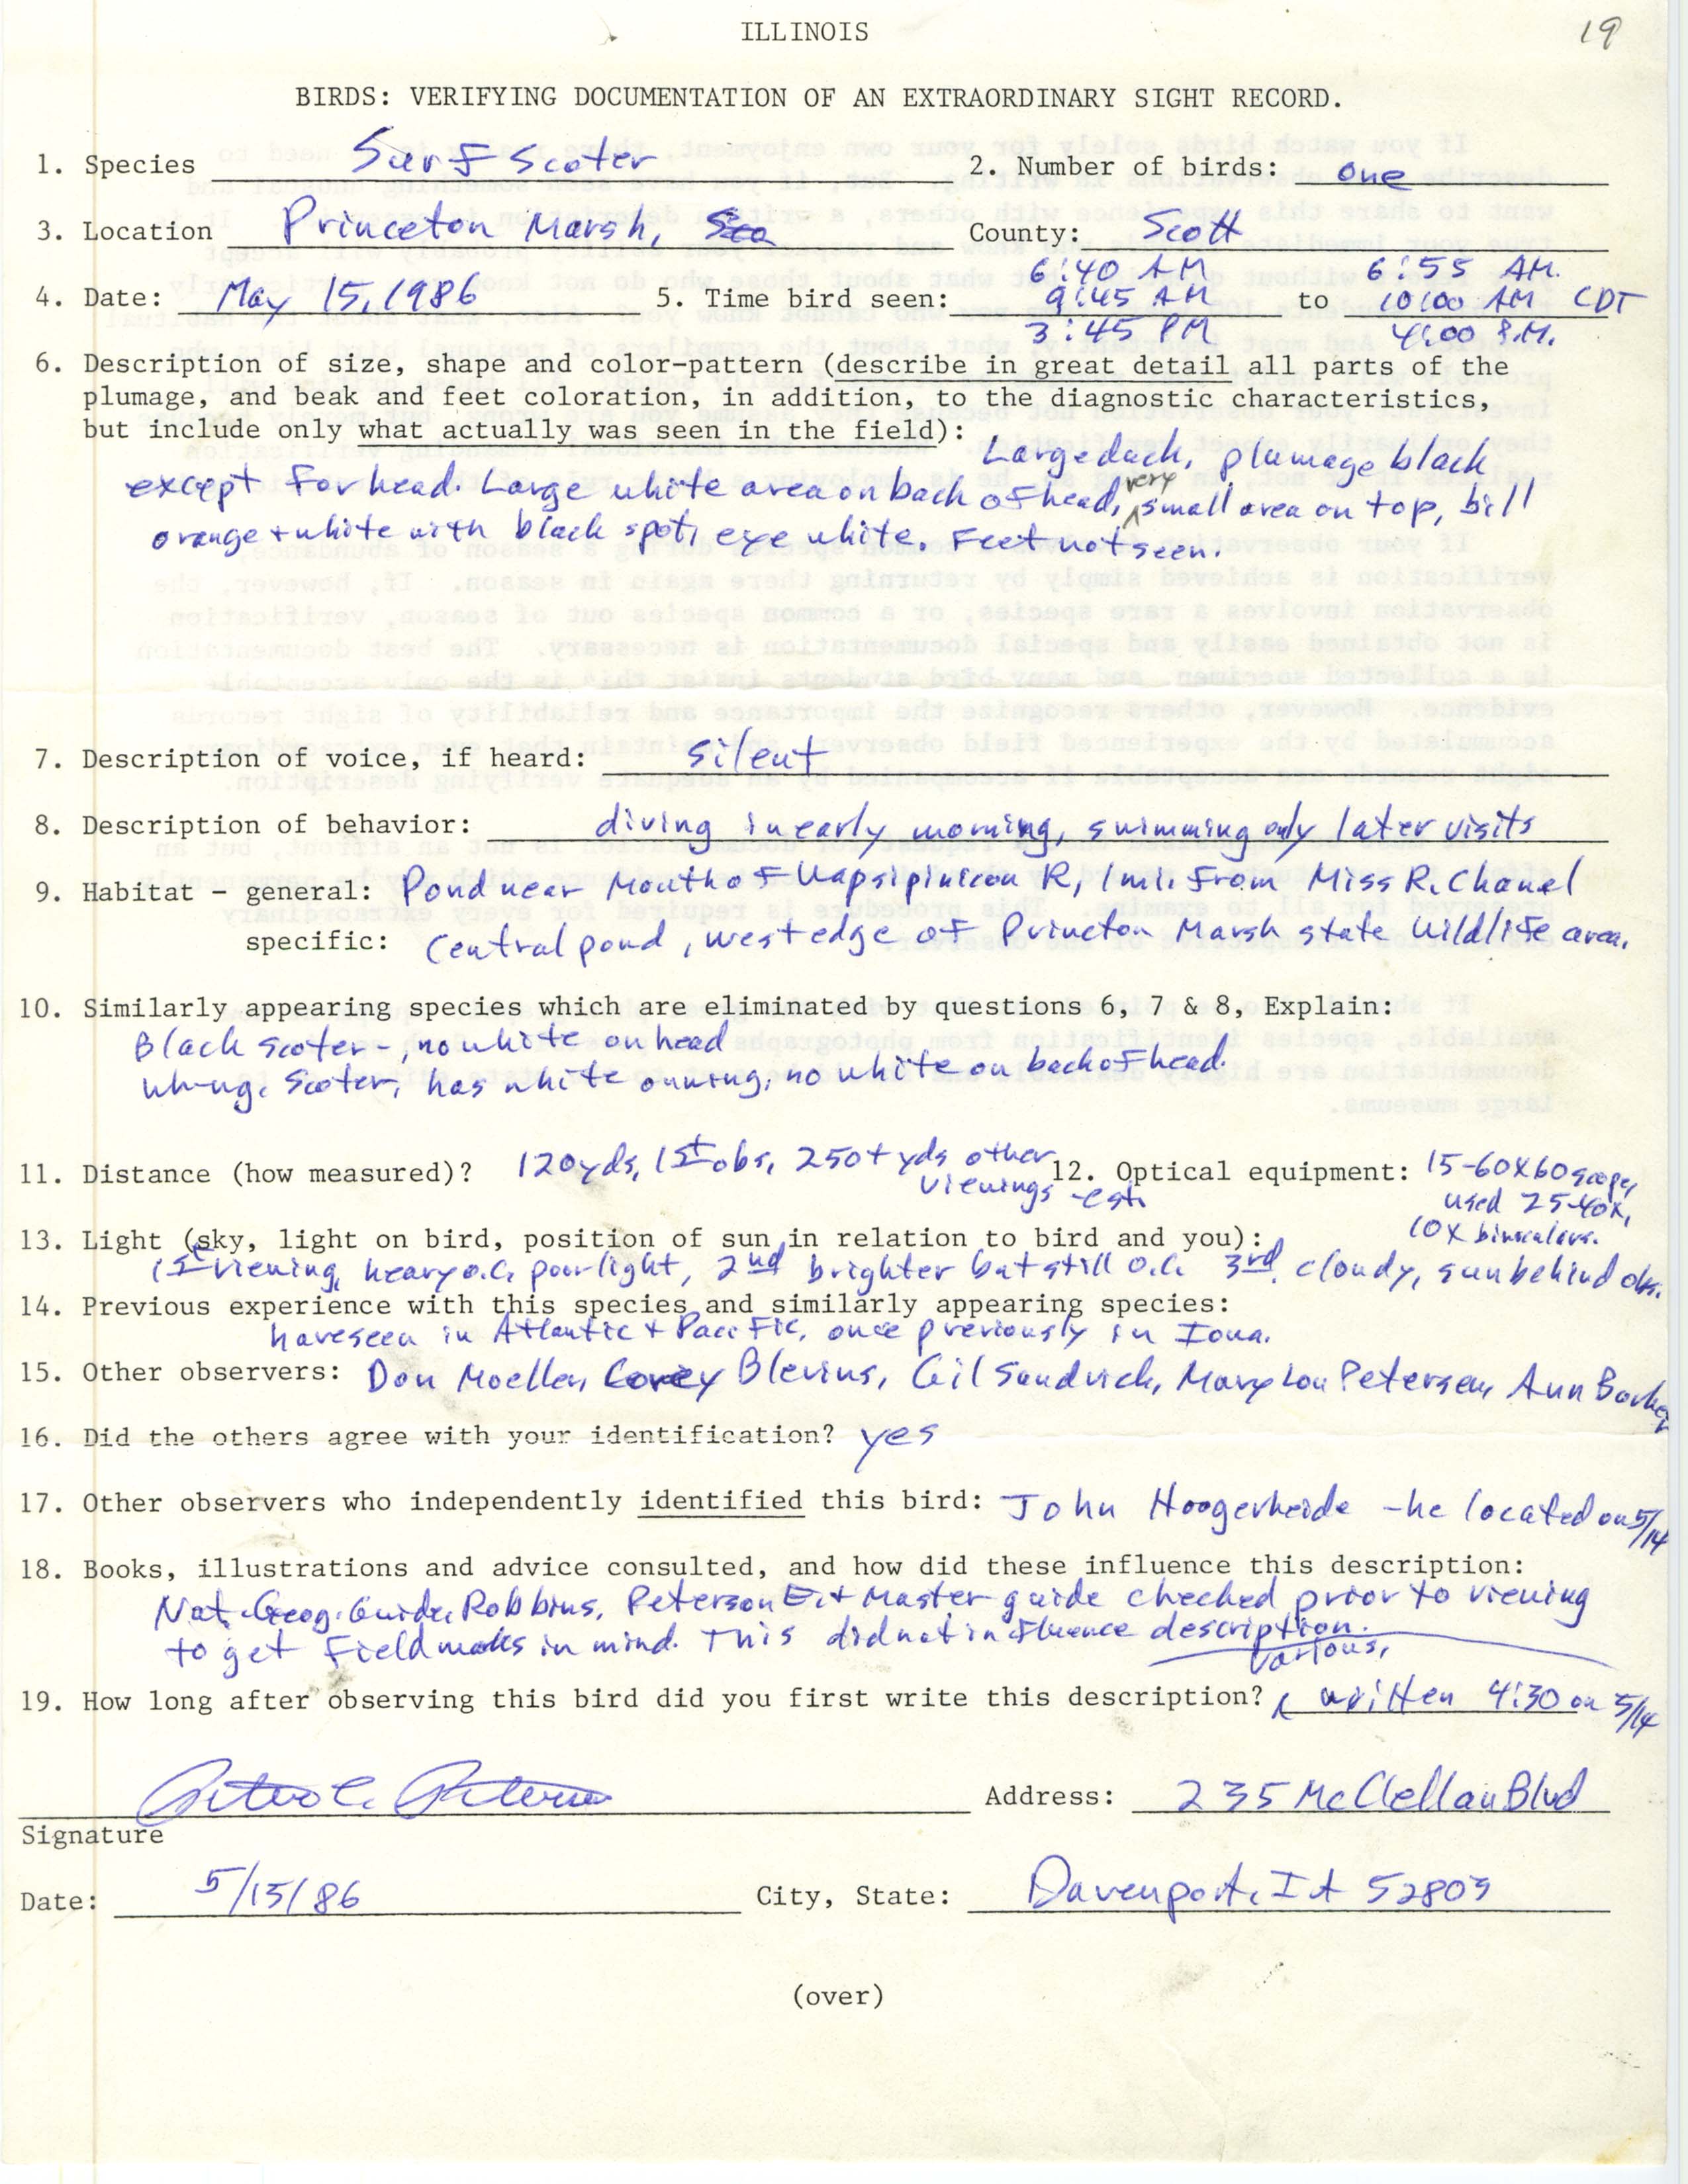 Rare bird documentation form for Surf Scoter at Princeton Marsh, 1986